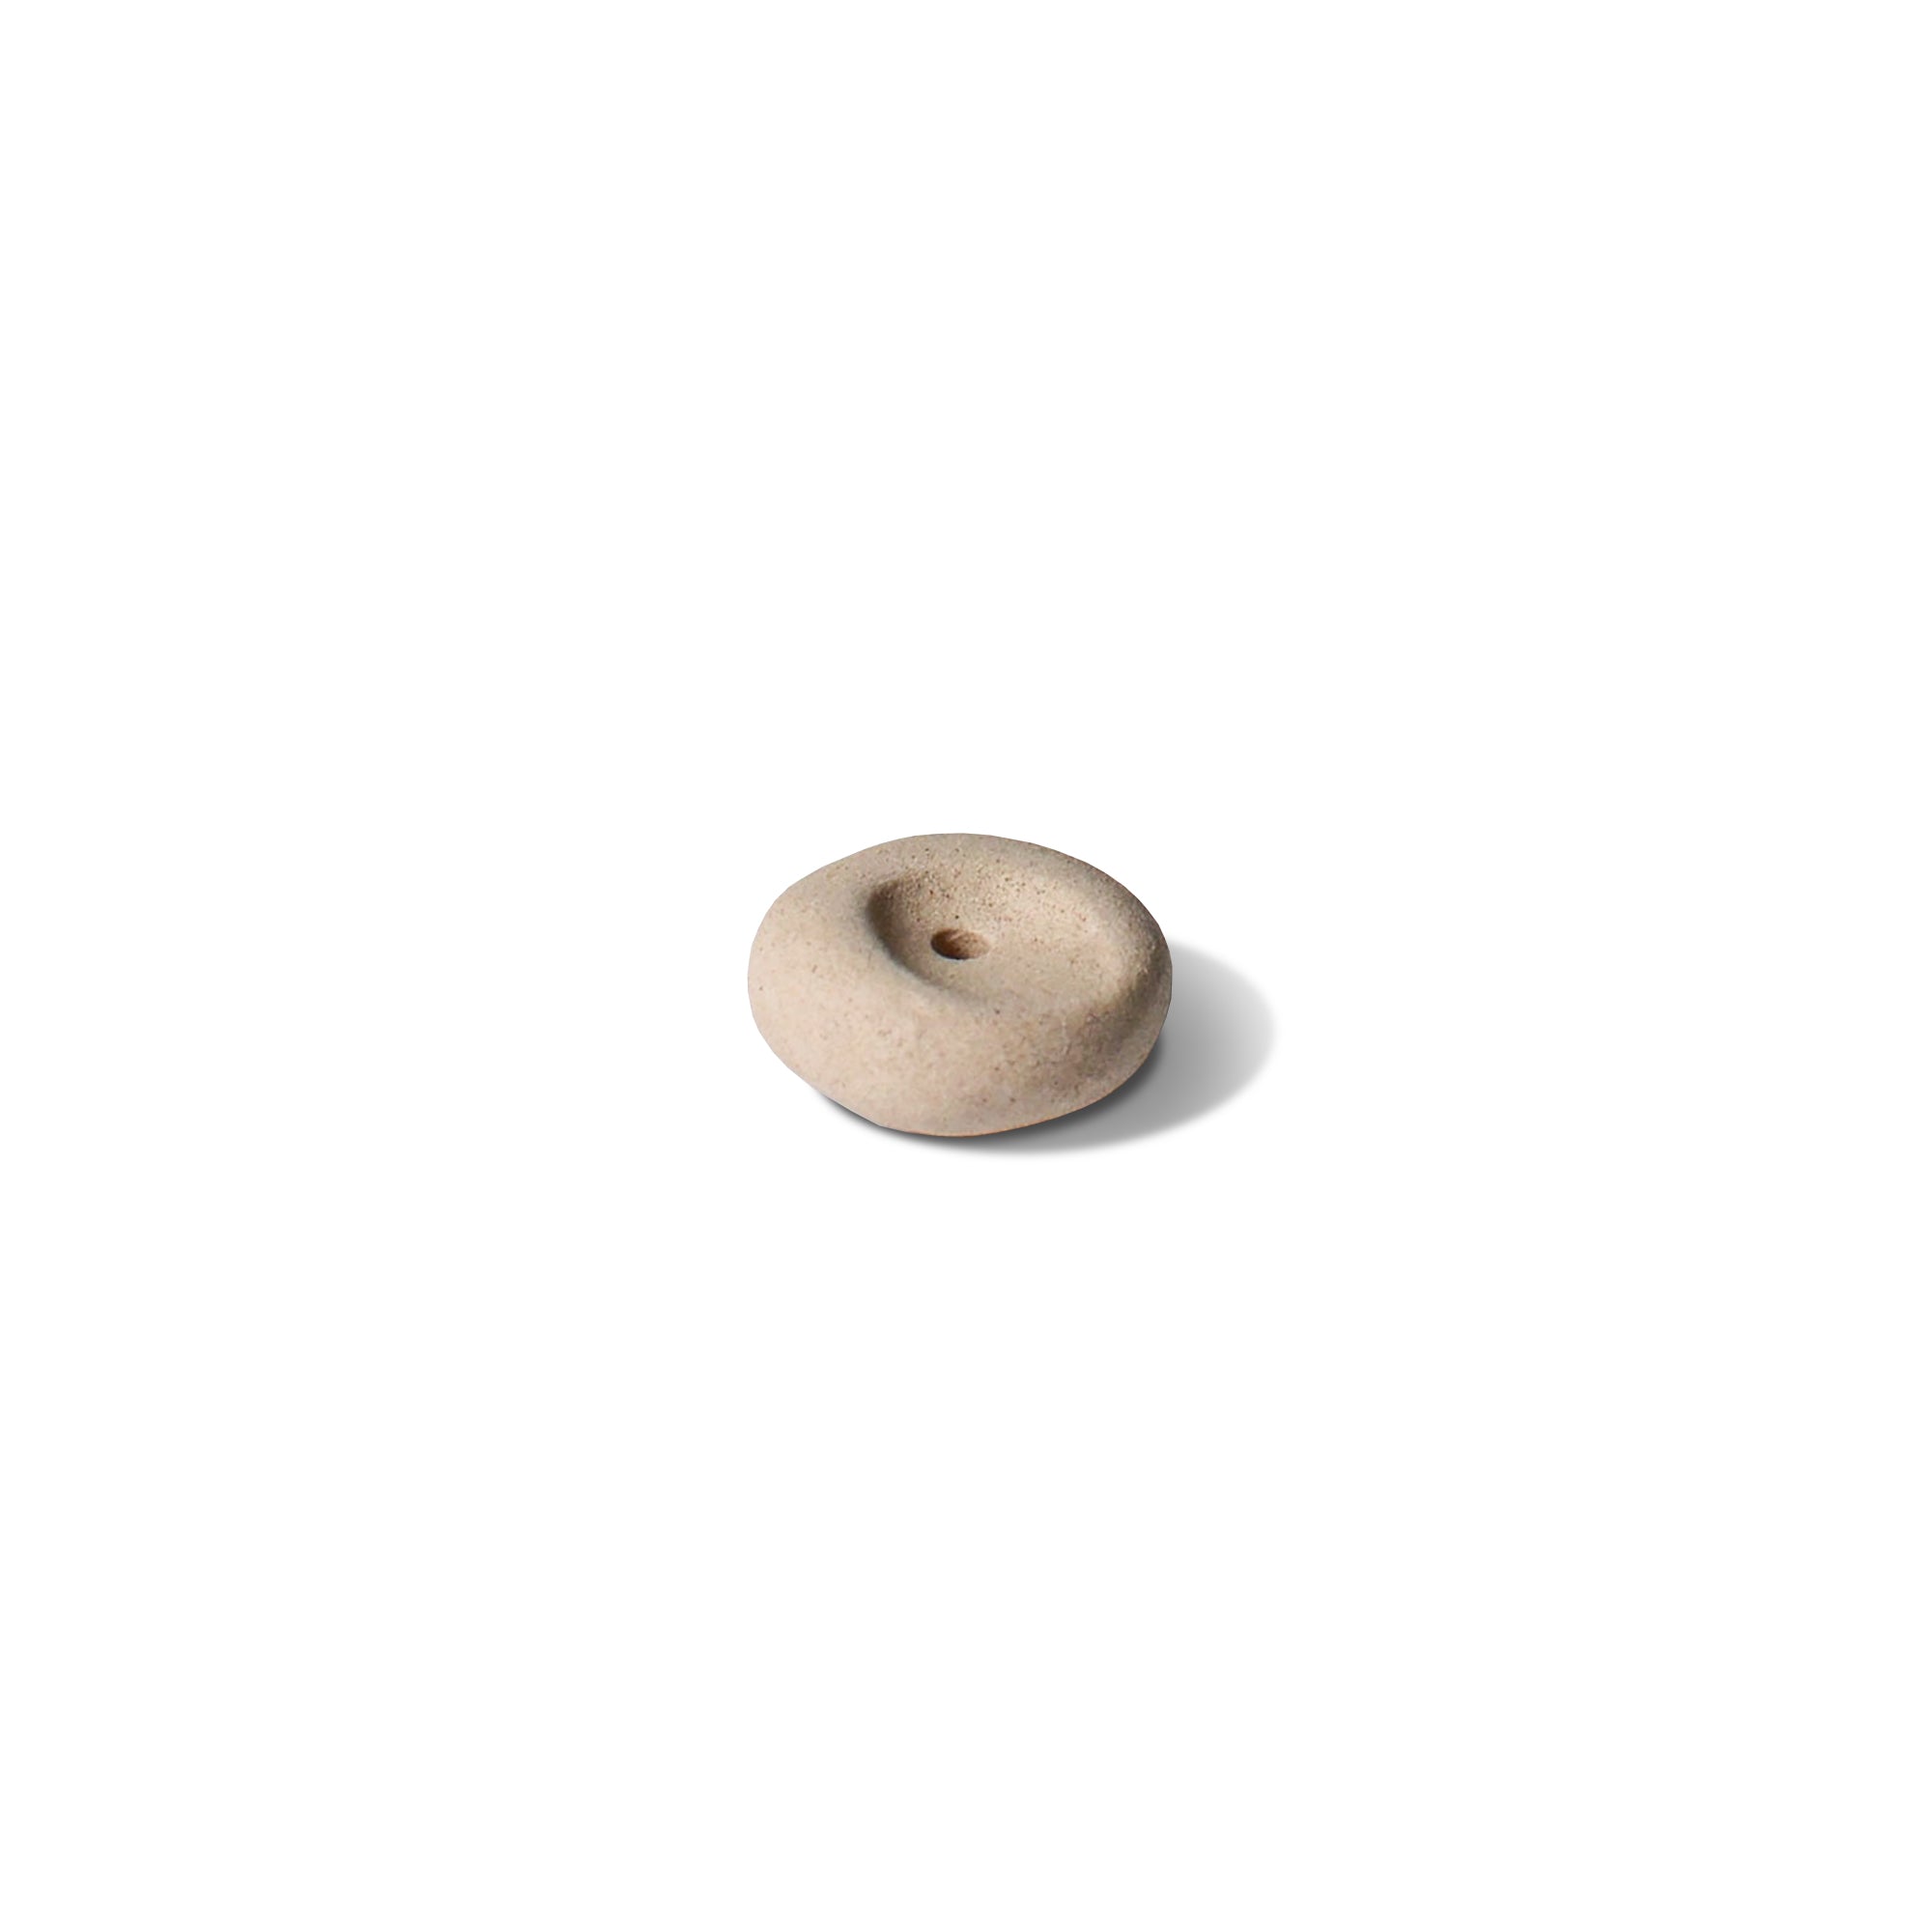 Pebble-shaped mini incense holder made of beige ceramic